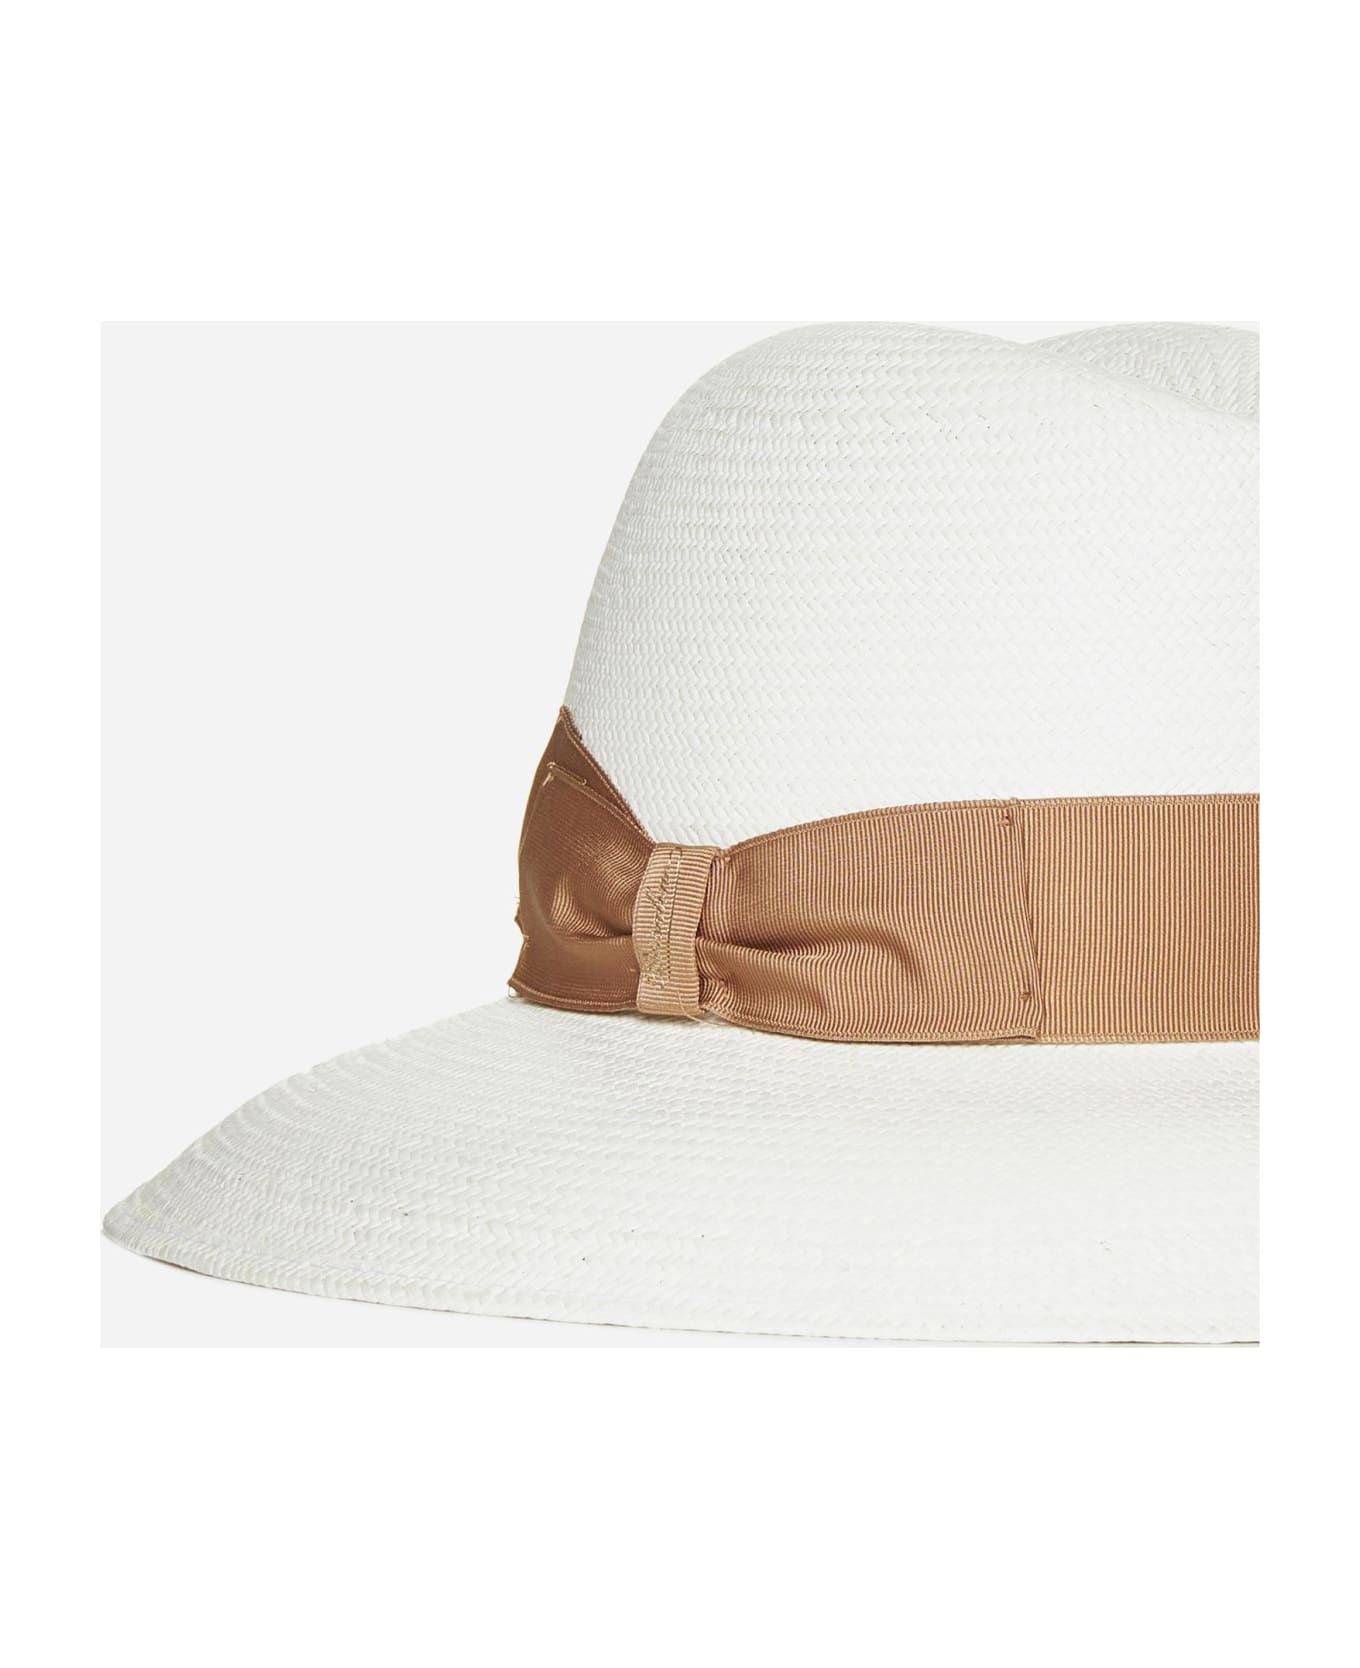 Borsalino Caludette Large Brim Panama Hat - Panna cammello